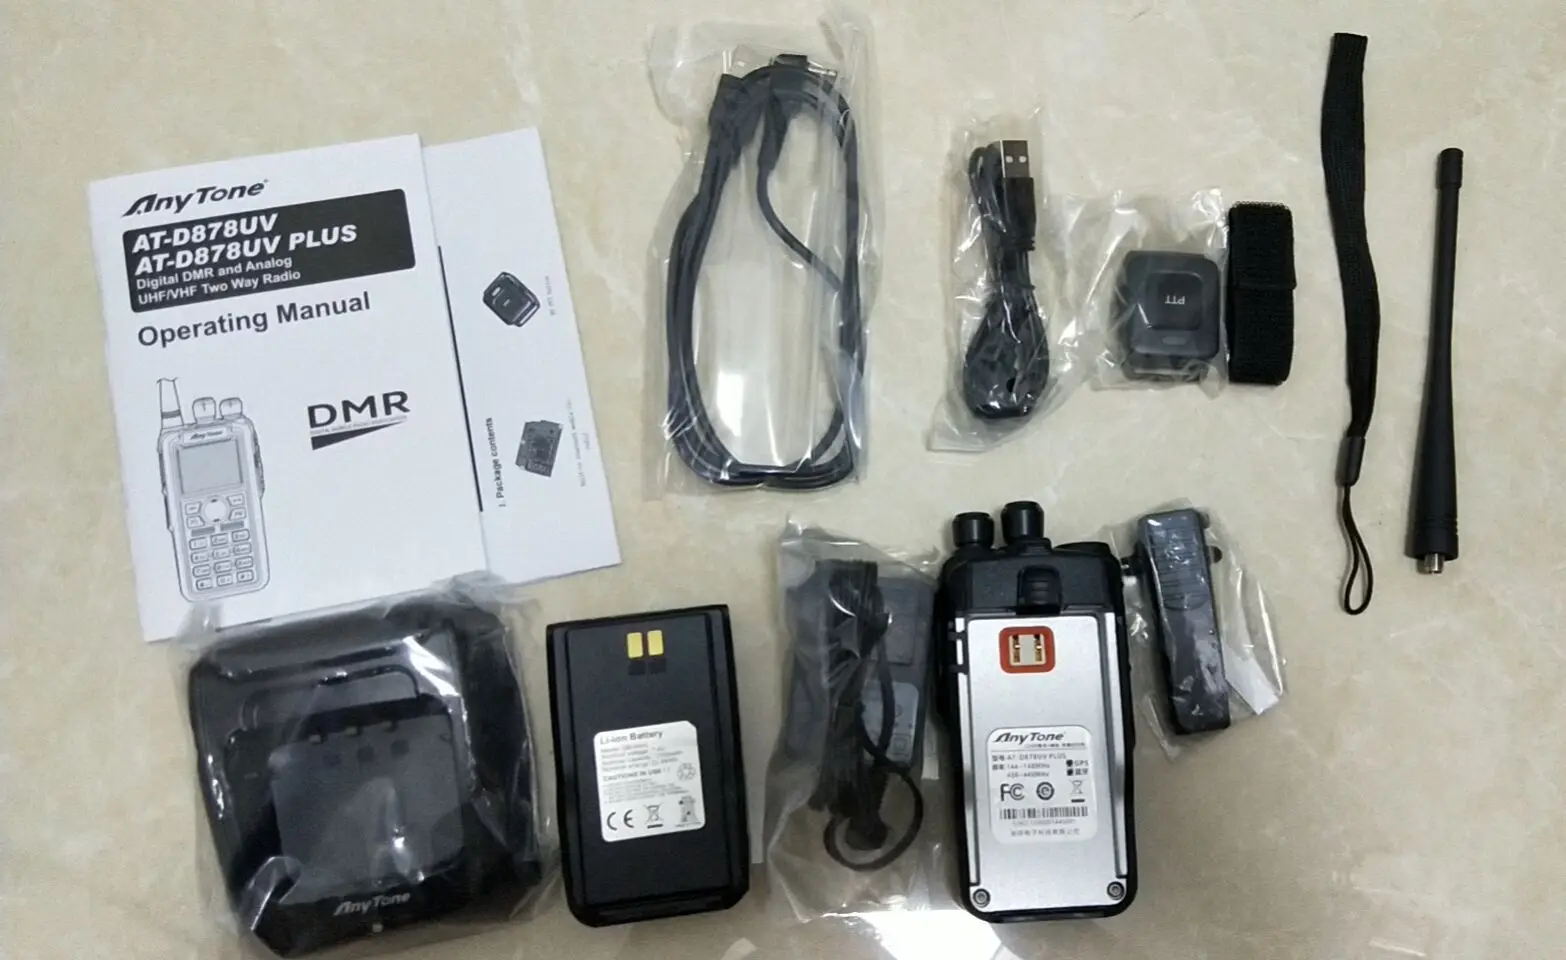 HAM walkie talkie Anytone AT-D878UVII Plus DMR Analog Radio GPS APRS RX & TX Amateur Dual band VHF/UHF